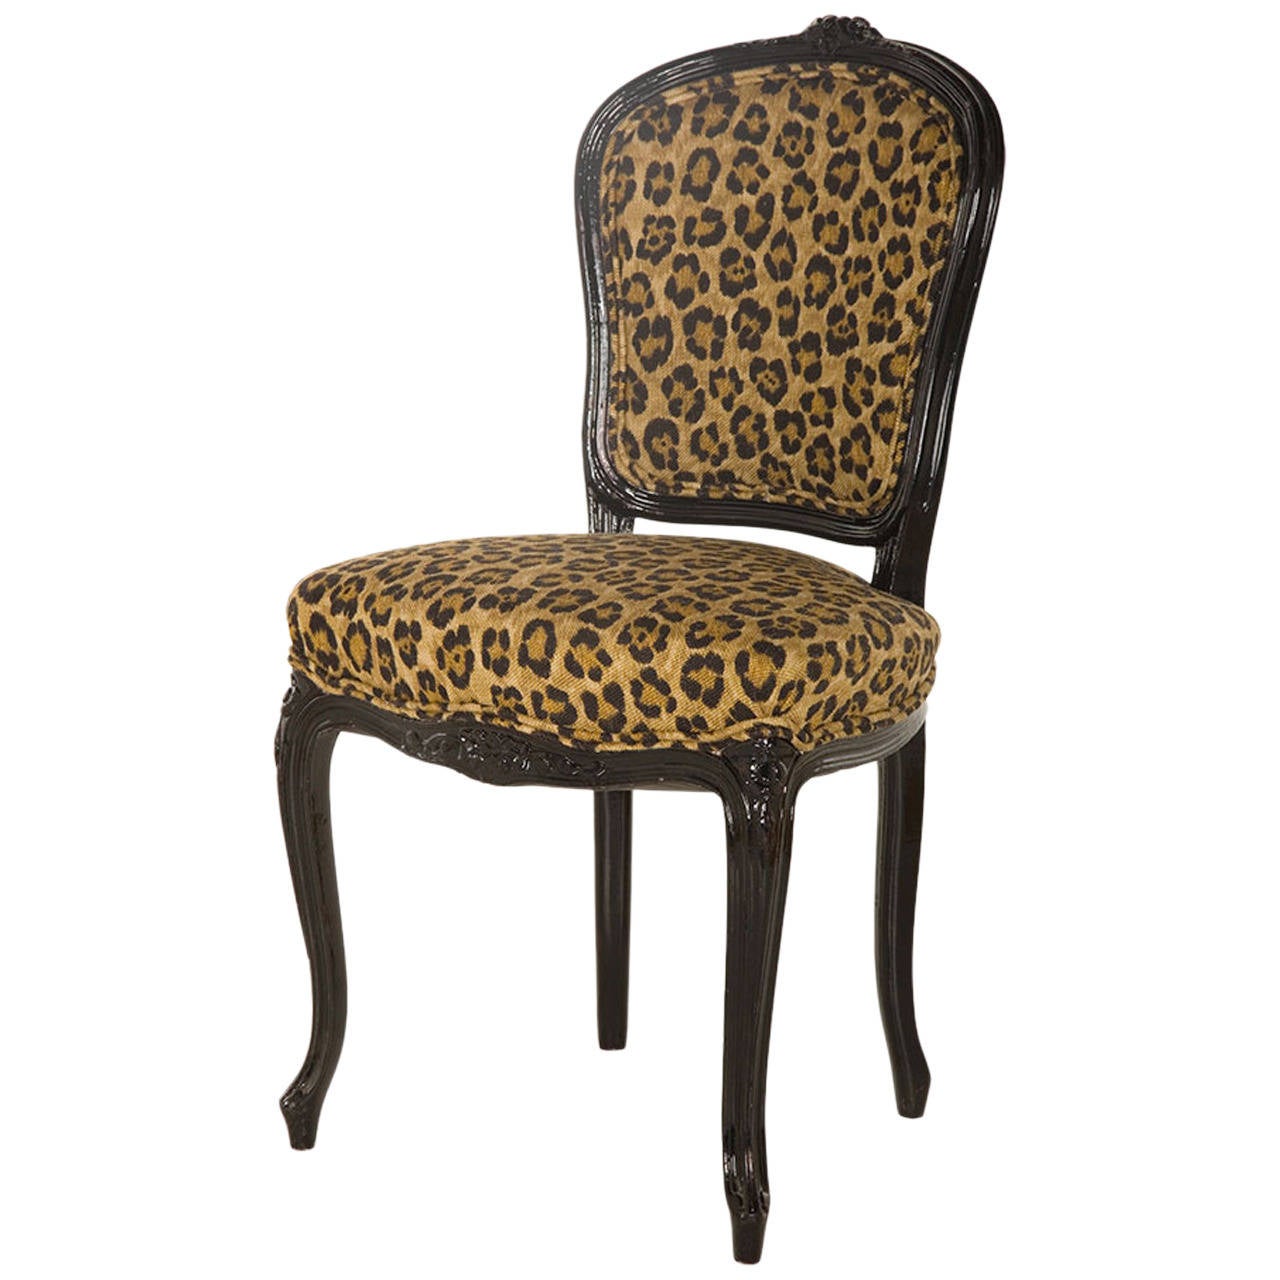 Vintage Leopard Print Cafe Chair at 1stdibs